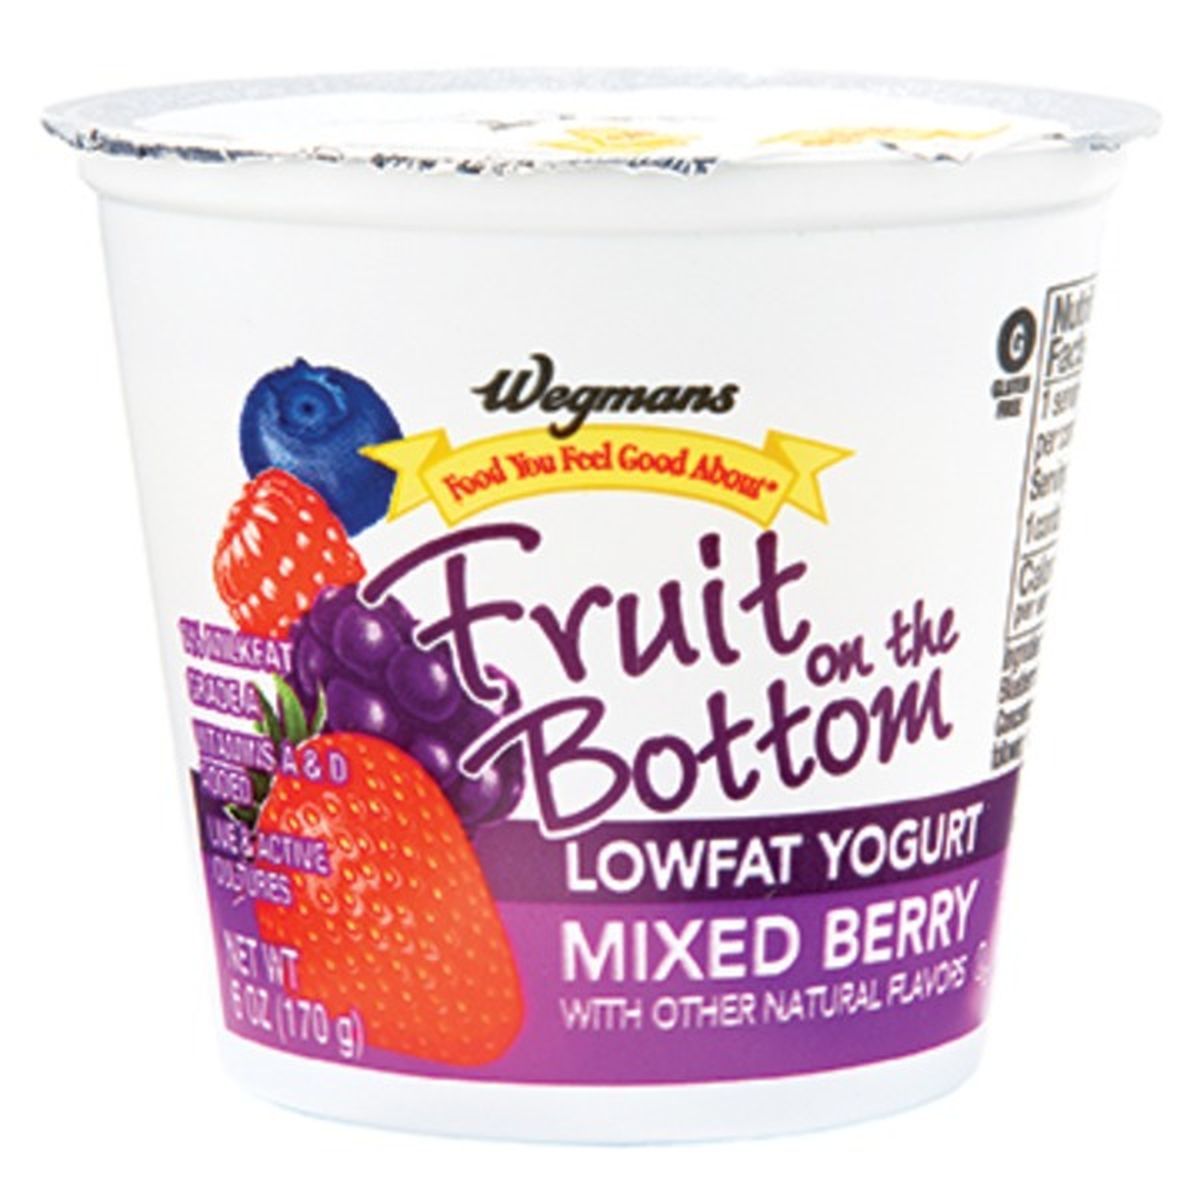 Calories in Wegmans Fruit On The Bottom Lowfat Mixed Berry Fruit On The Bottom Yogurt